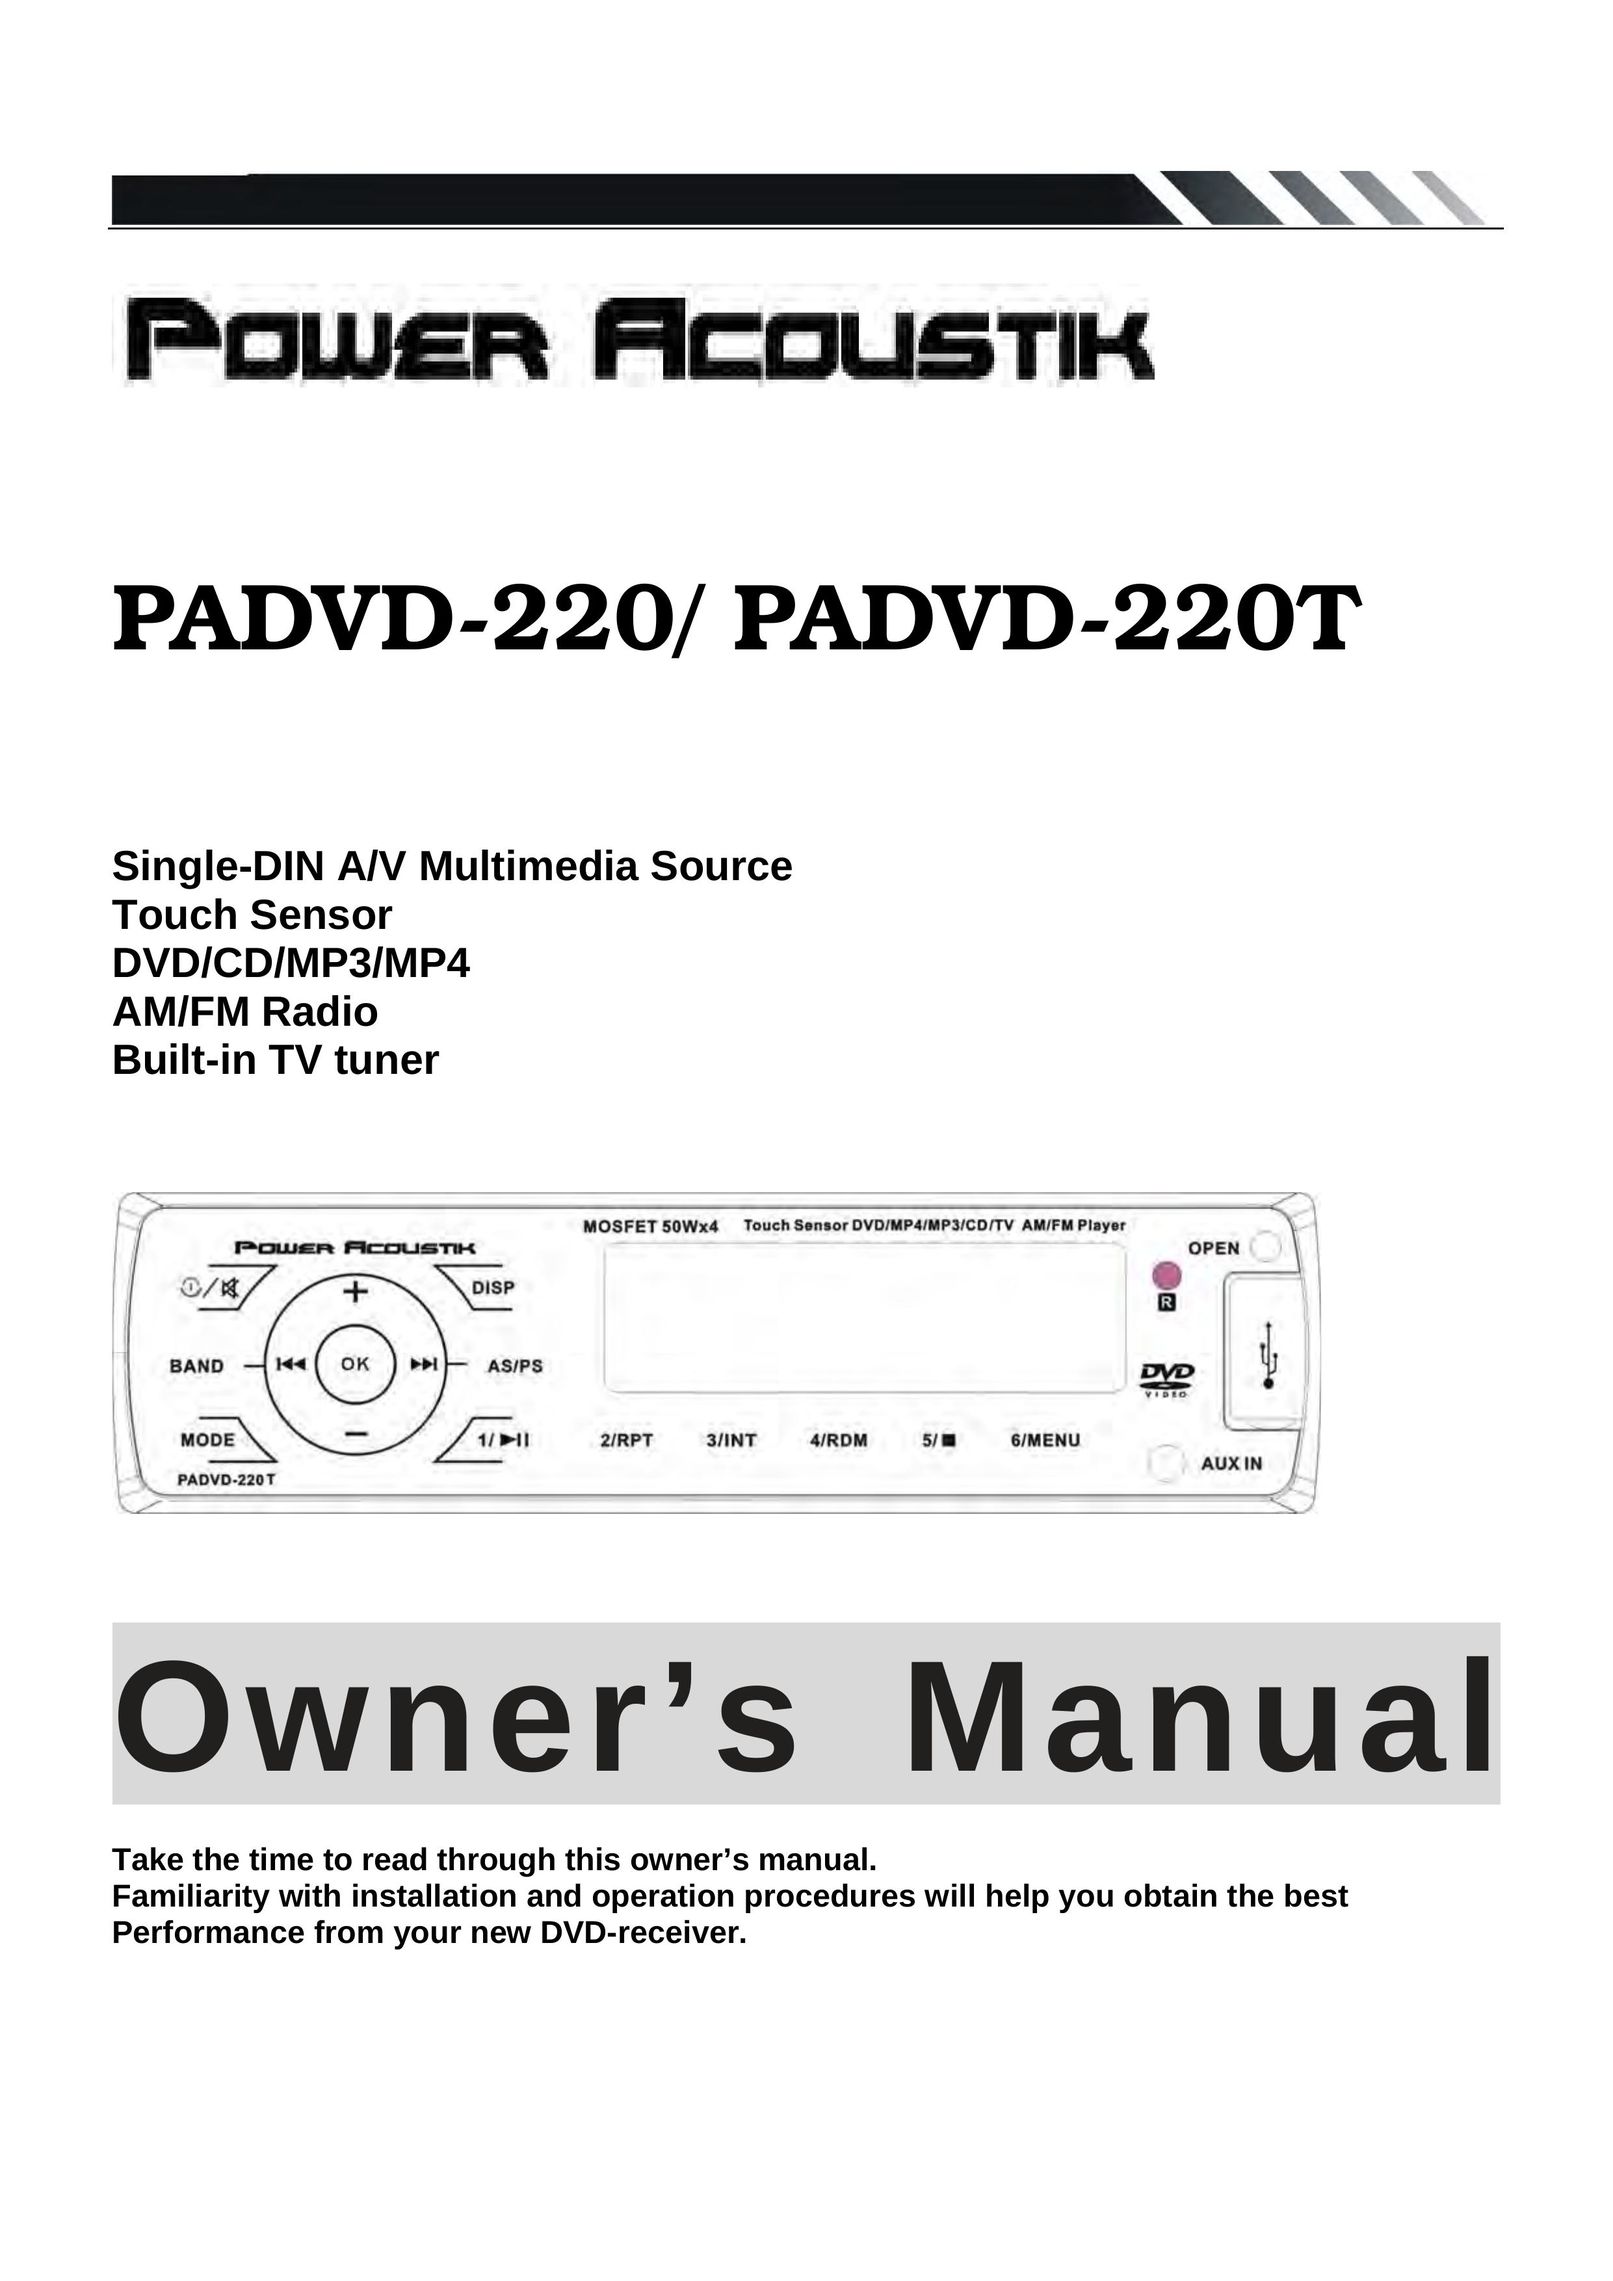 Power Acoustik PADVD-220 Car Video System User Manual